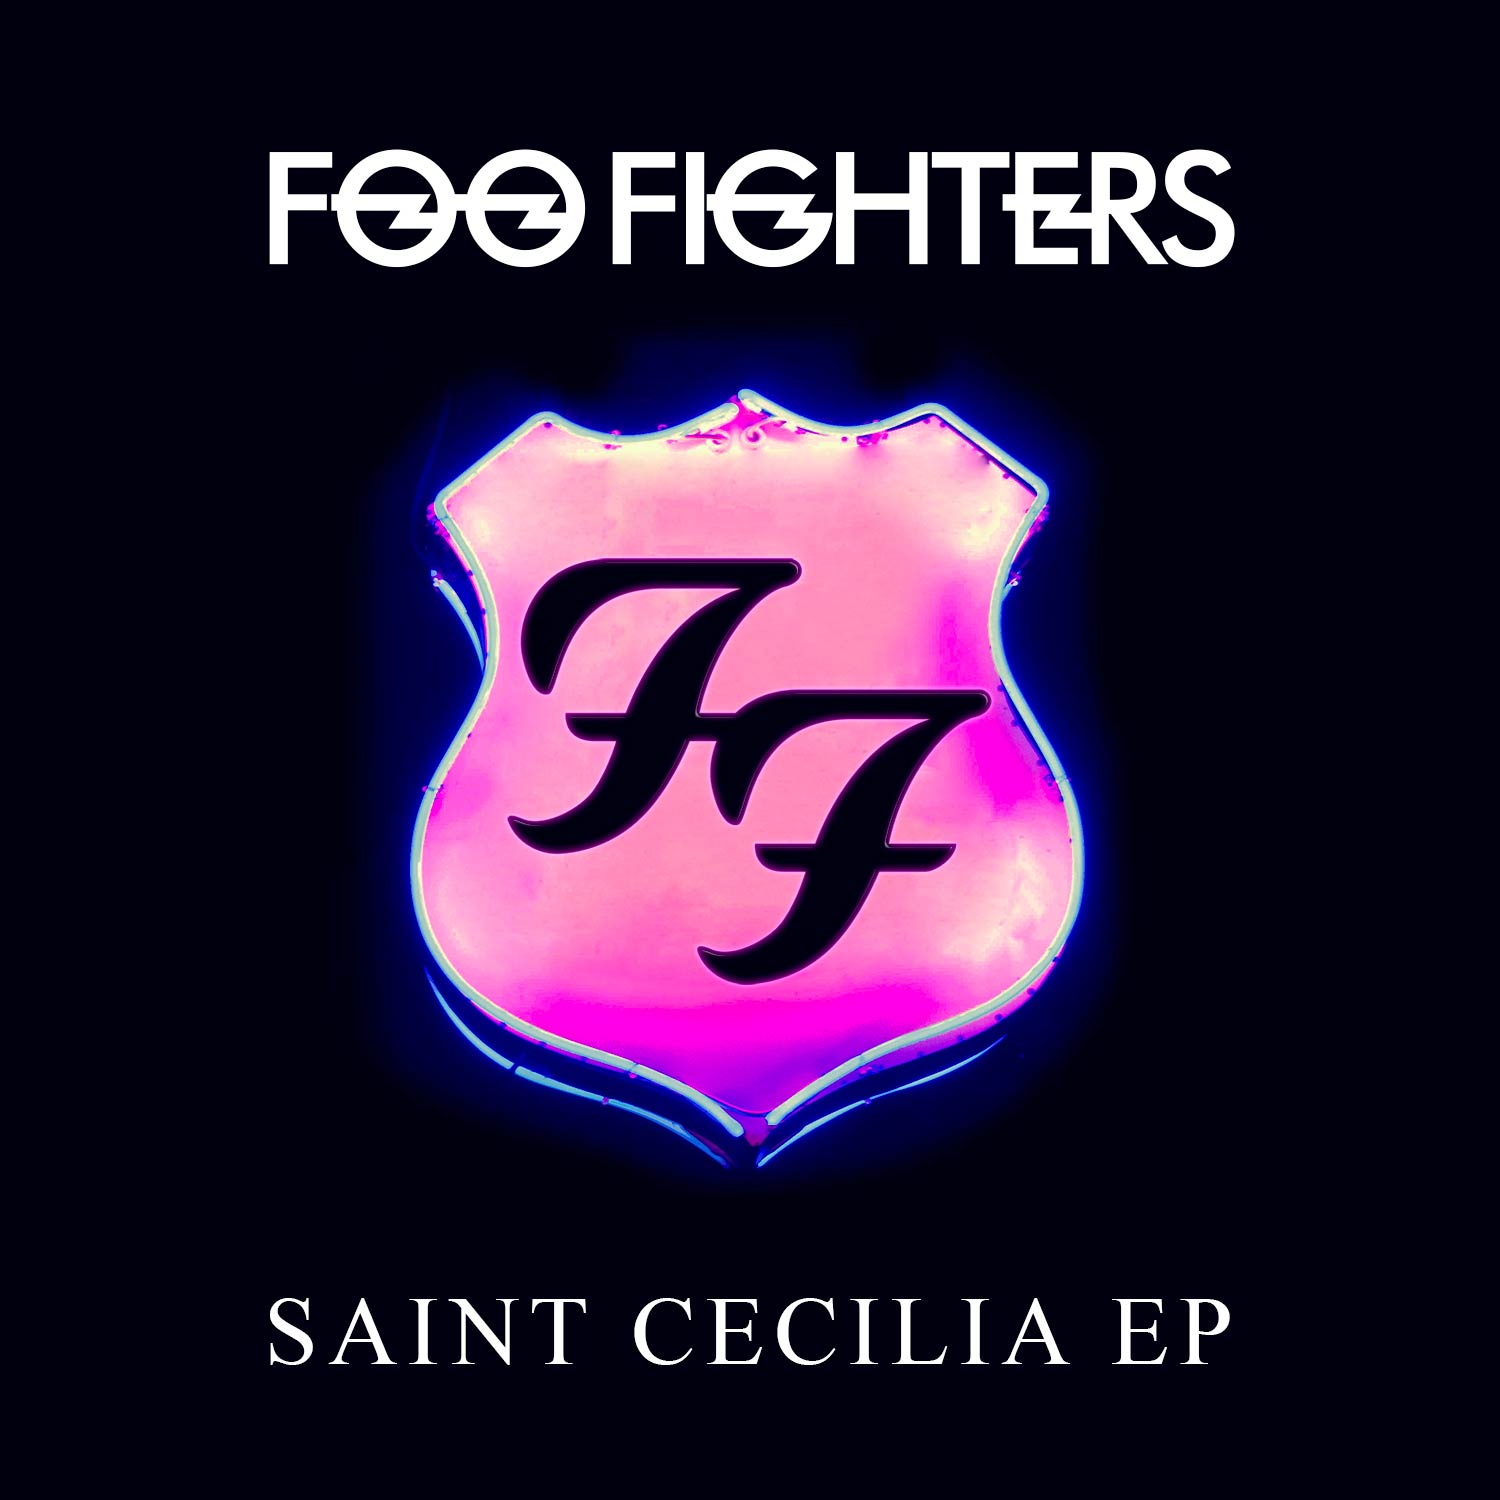 Foo Fighters: Saint Cecilia EP